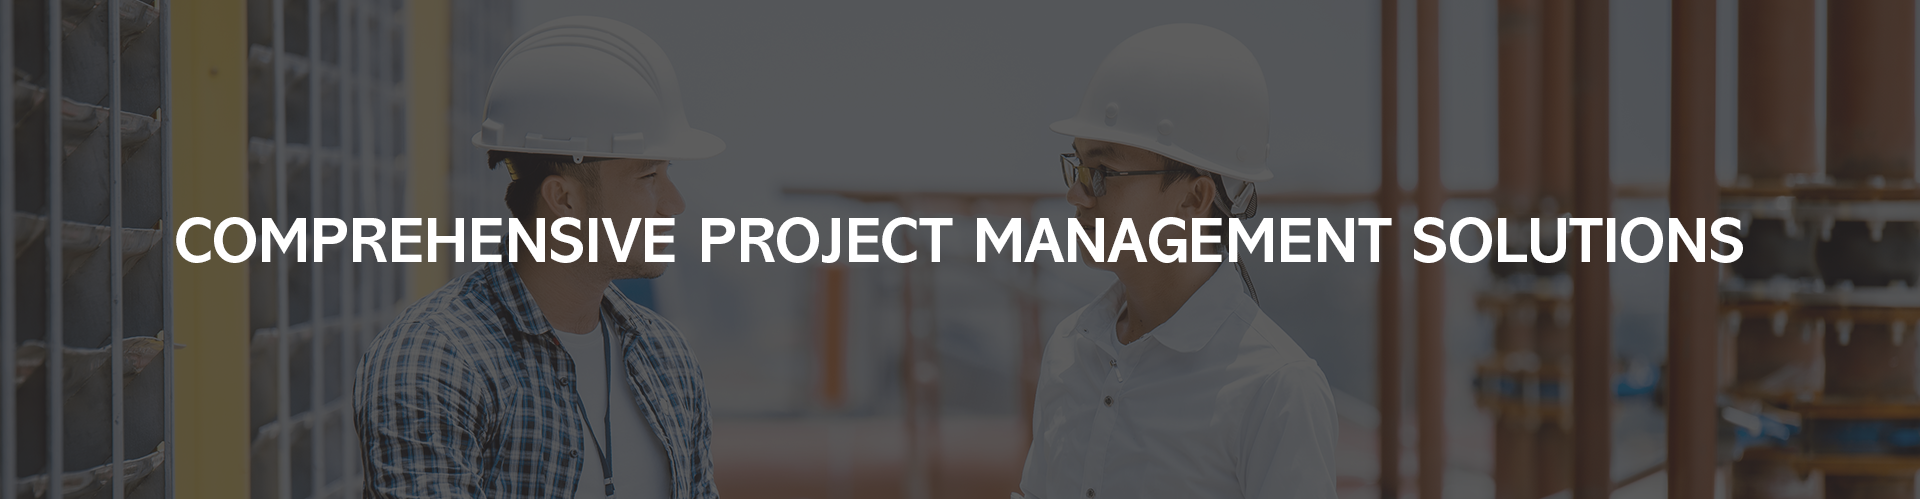 Comprehensive Project Management Solutions